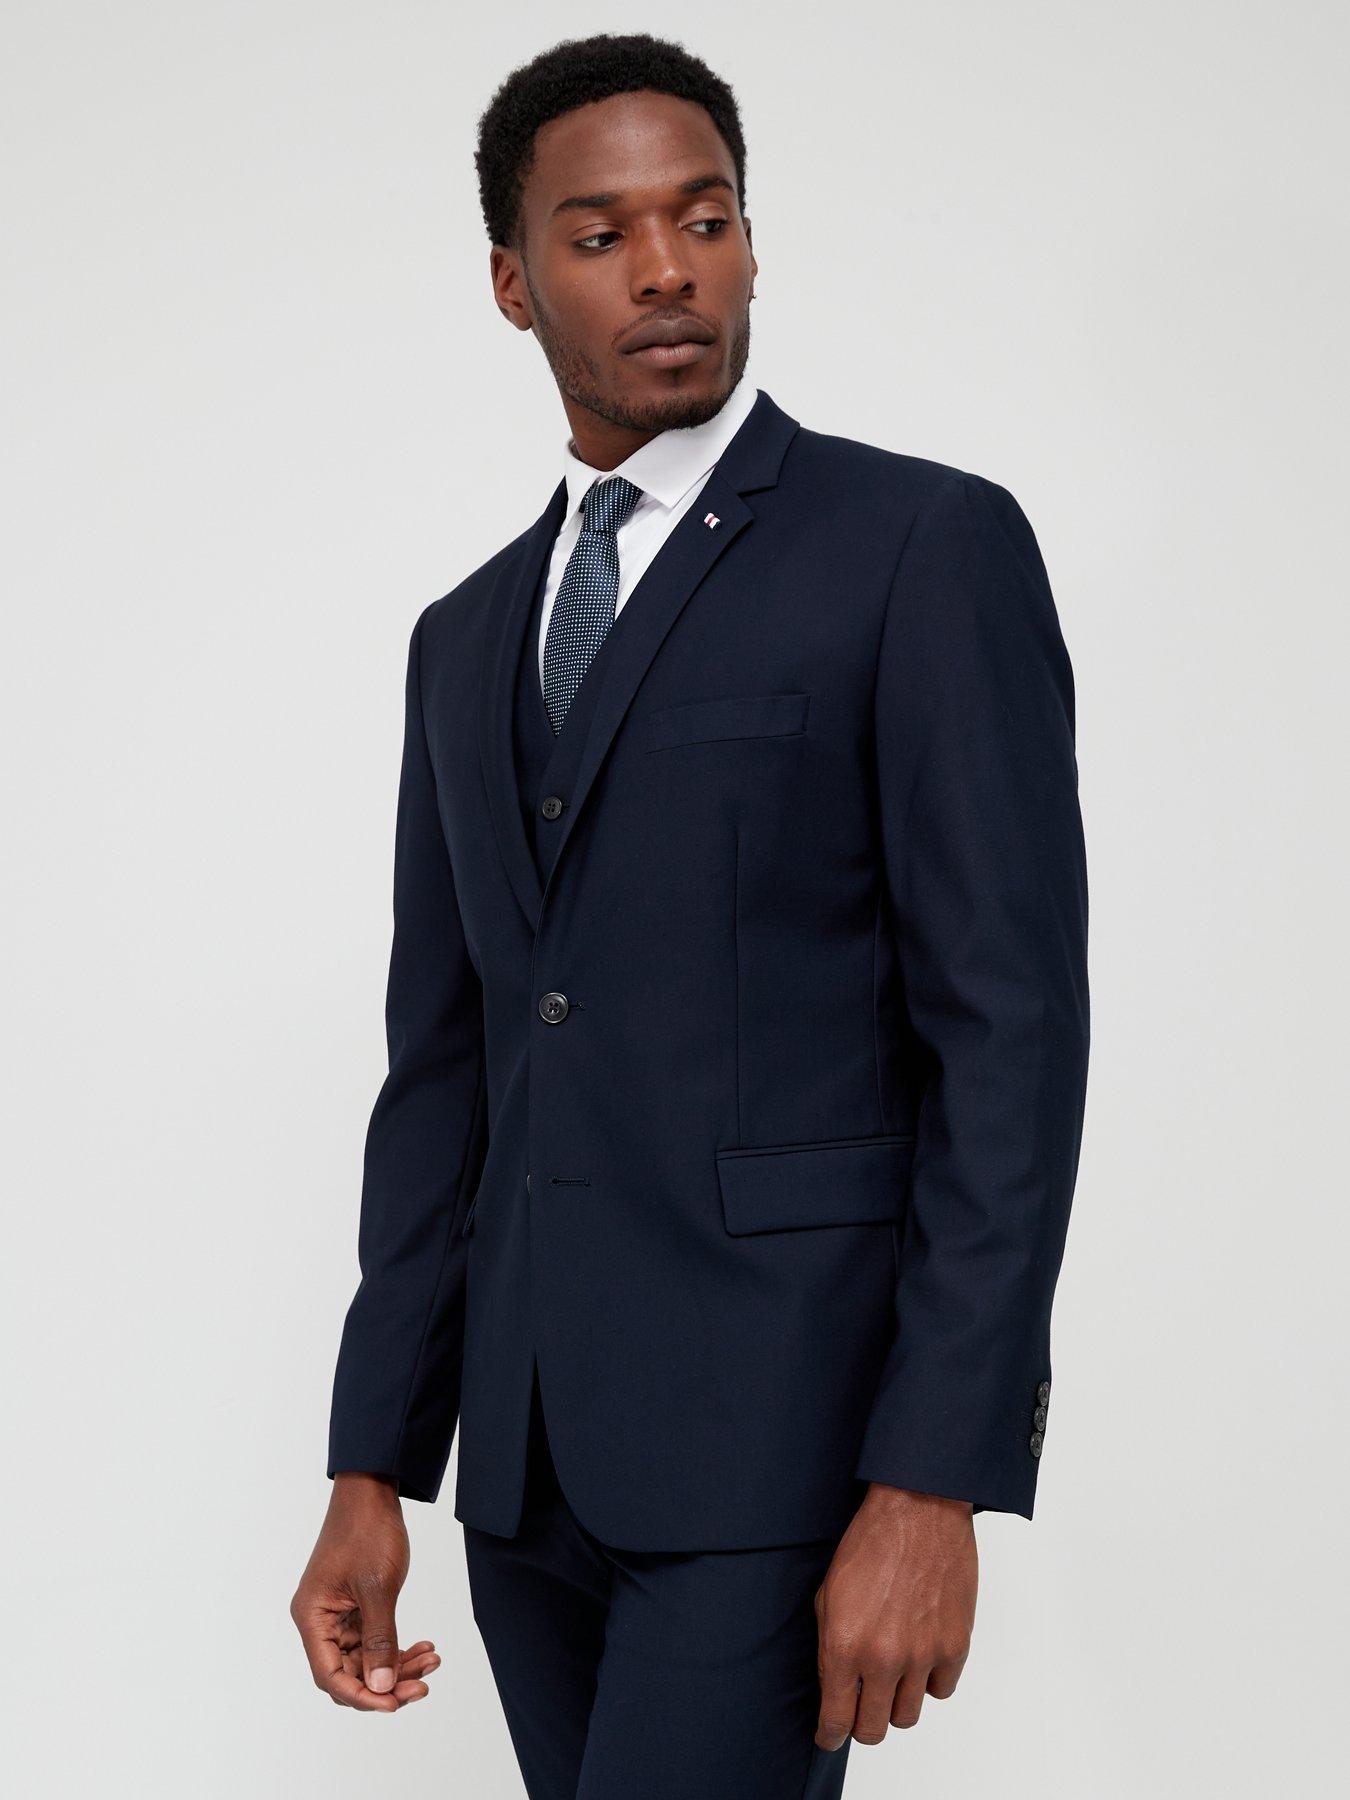 Tergal Tie/accessory Navy Blue/Red Single discount 89% MEN FASHION Suits & Sets Elegant 